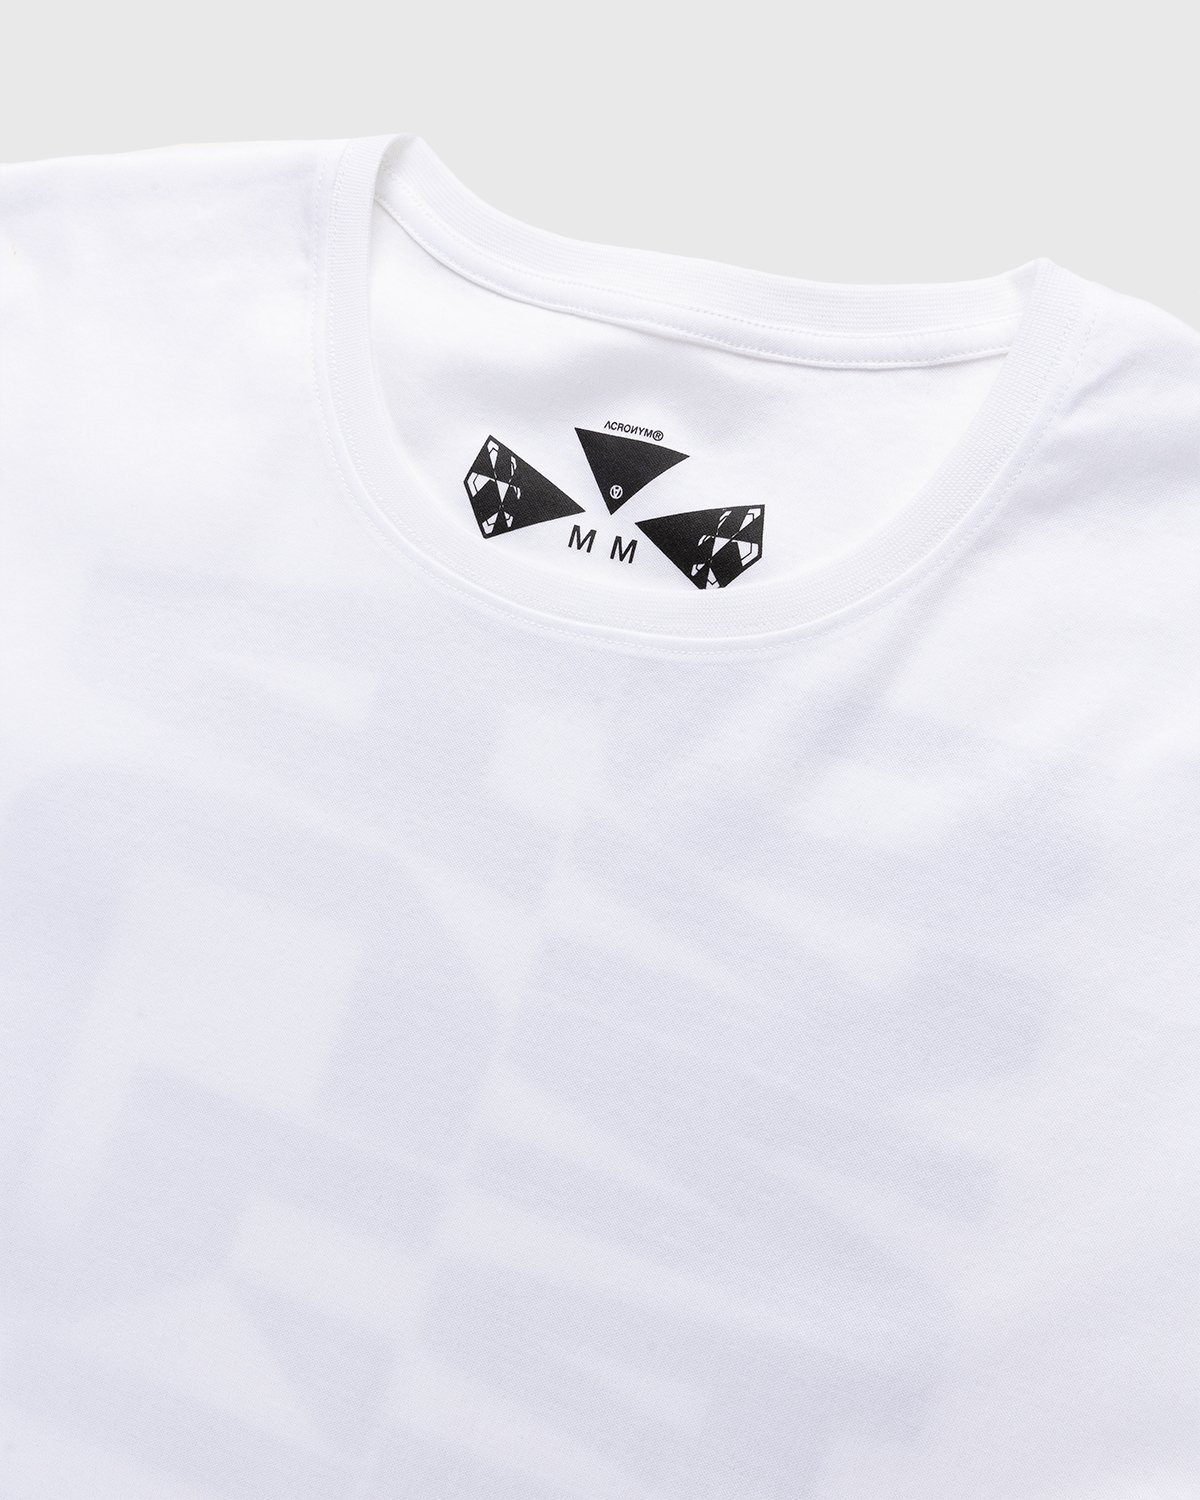 ACRONYM - S24-PR-A T-Shirt White - Clothing - White - Image 5